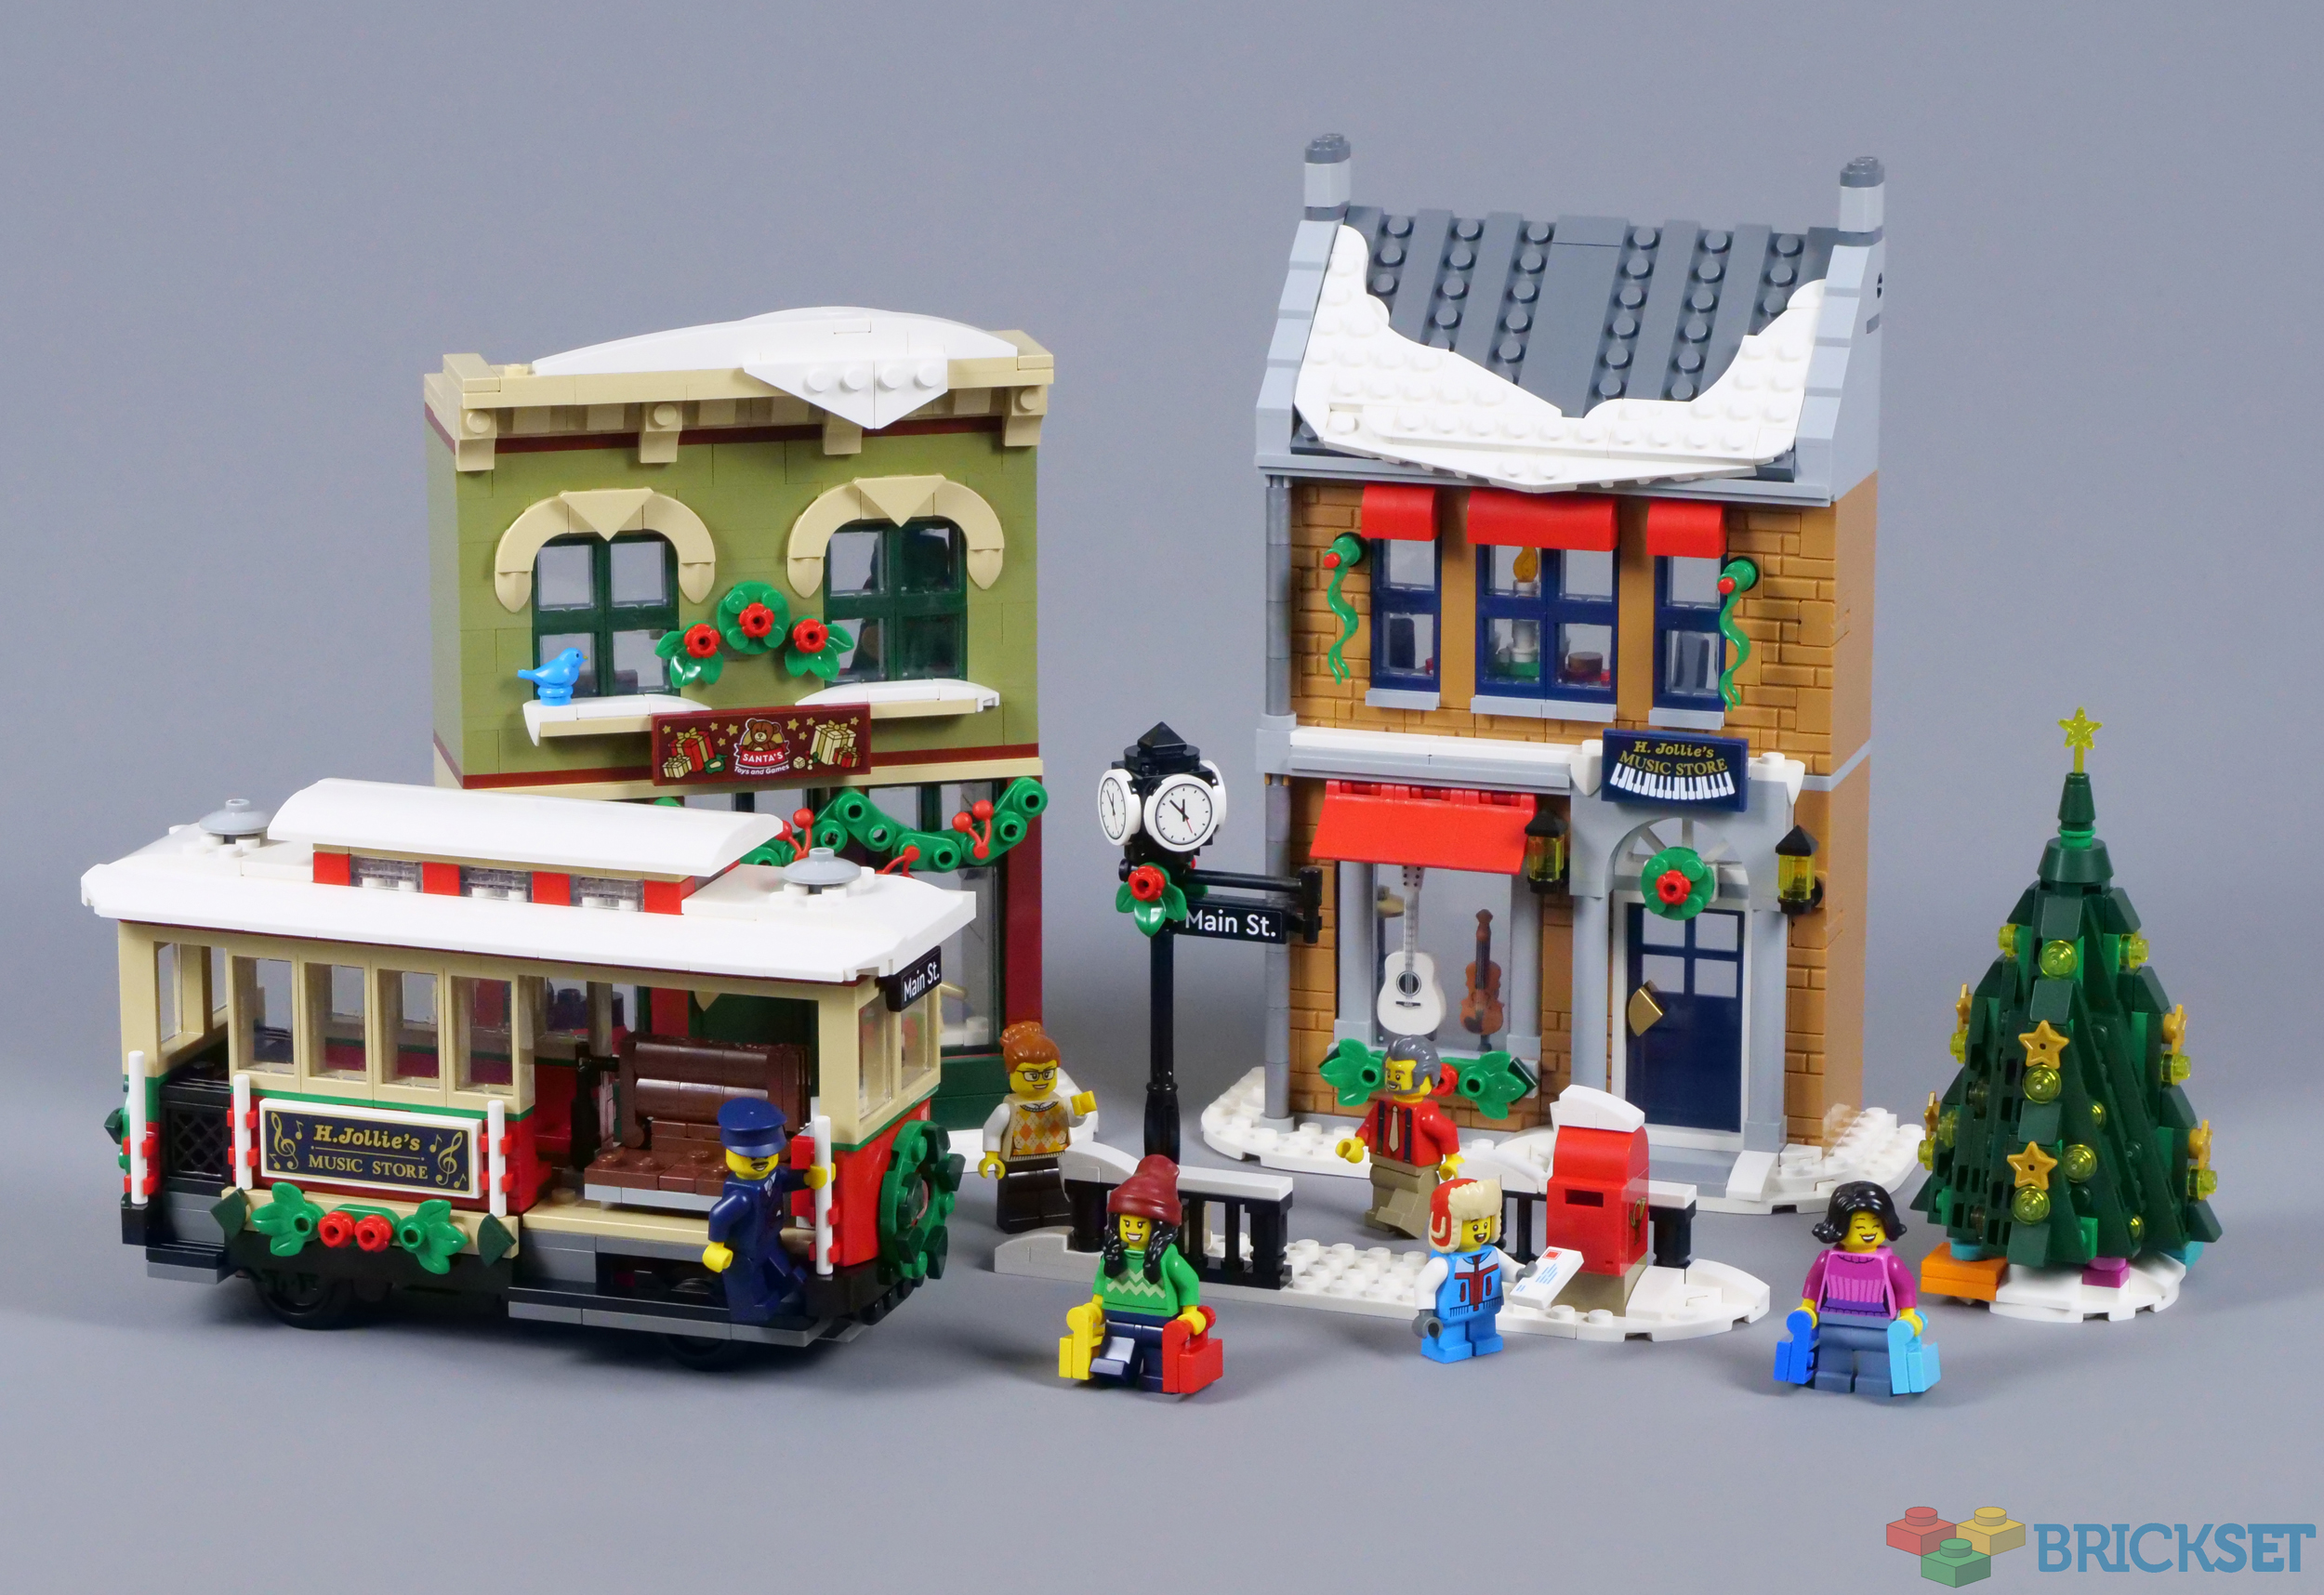 LEGO 10308 Holiday Street review | Brickset